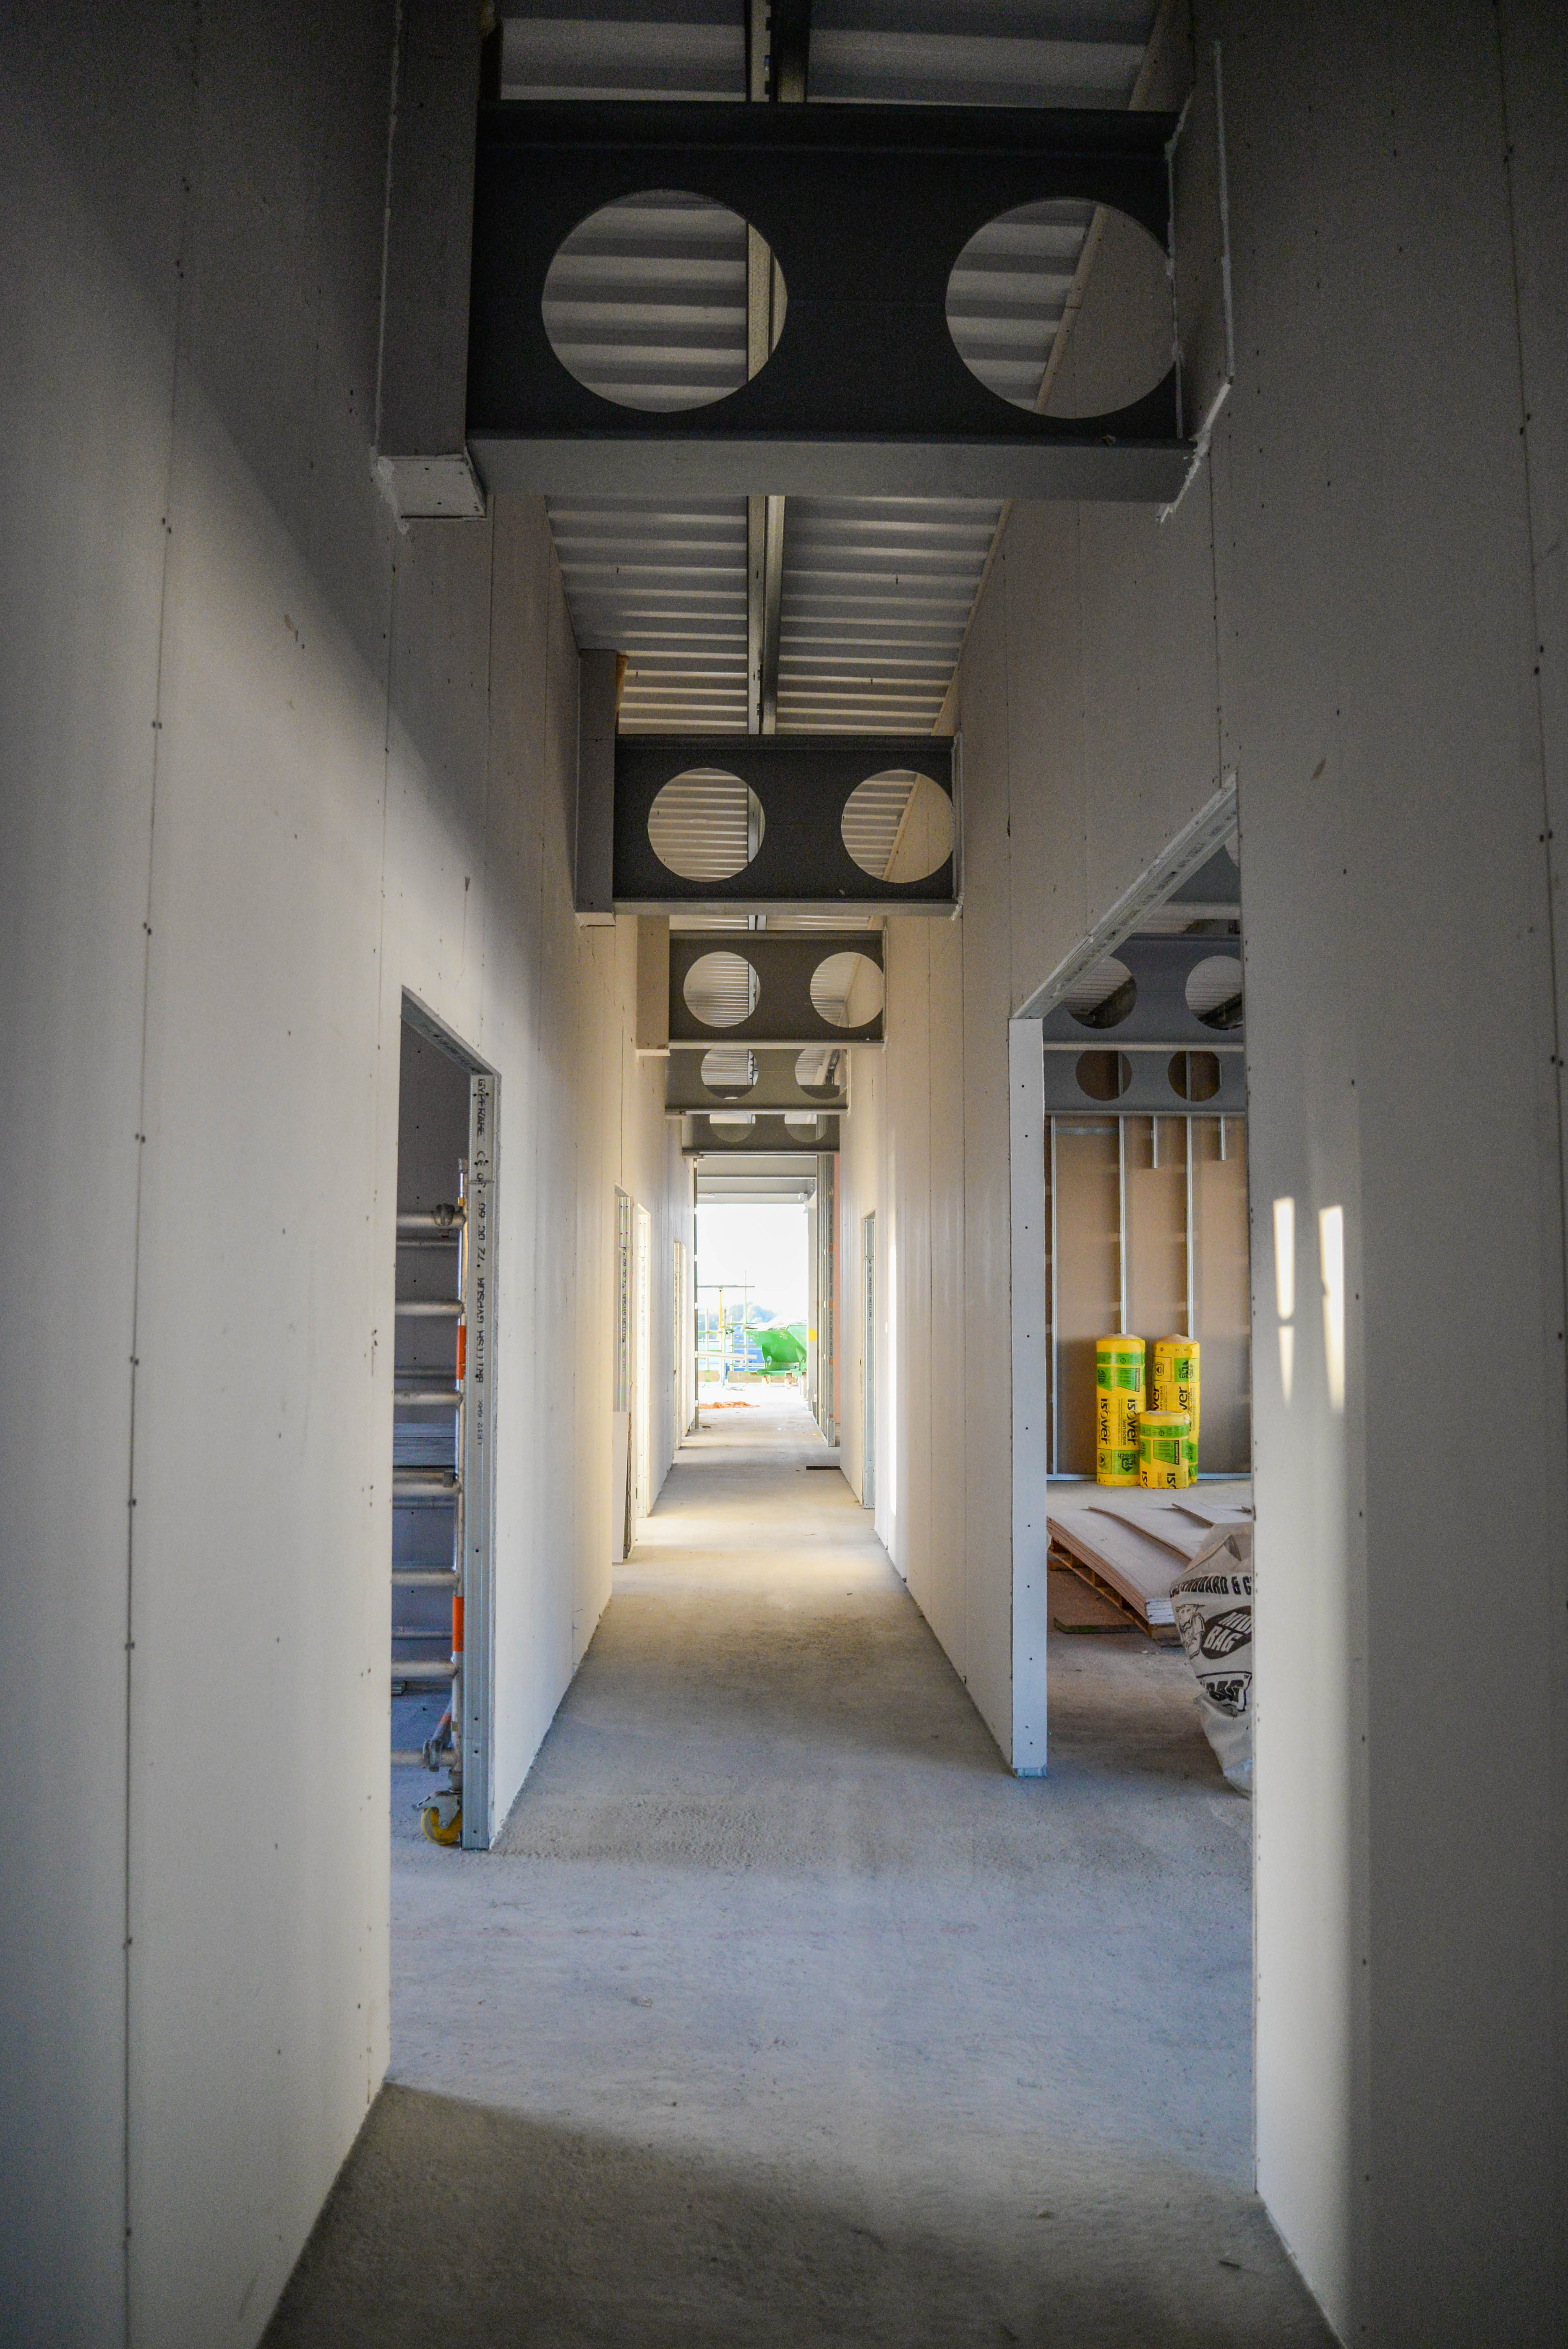 Image of a corridor in progress